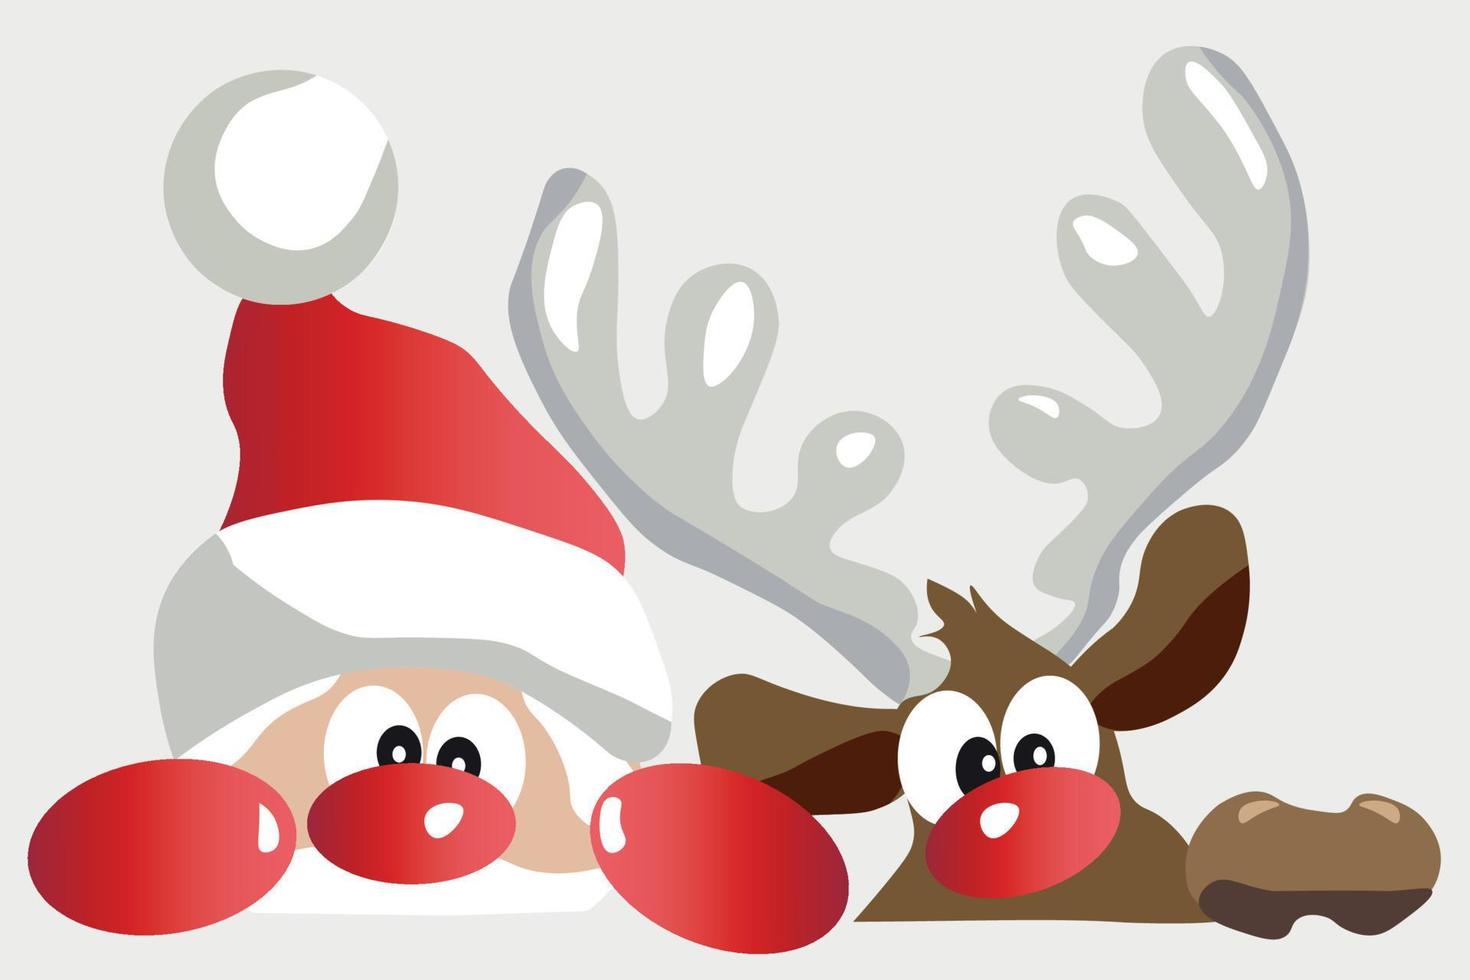 Santa Claus and Christmas reindeer cartoon characters vector